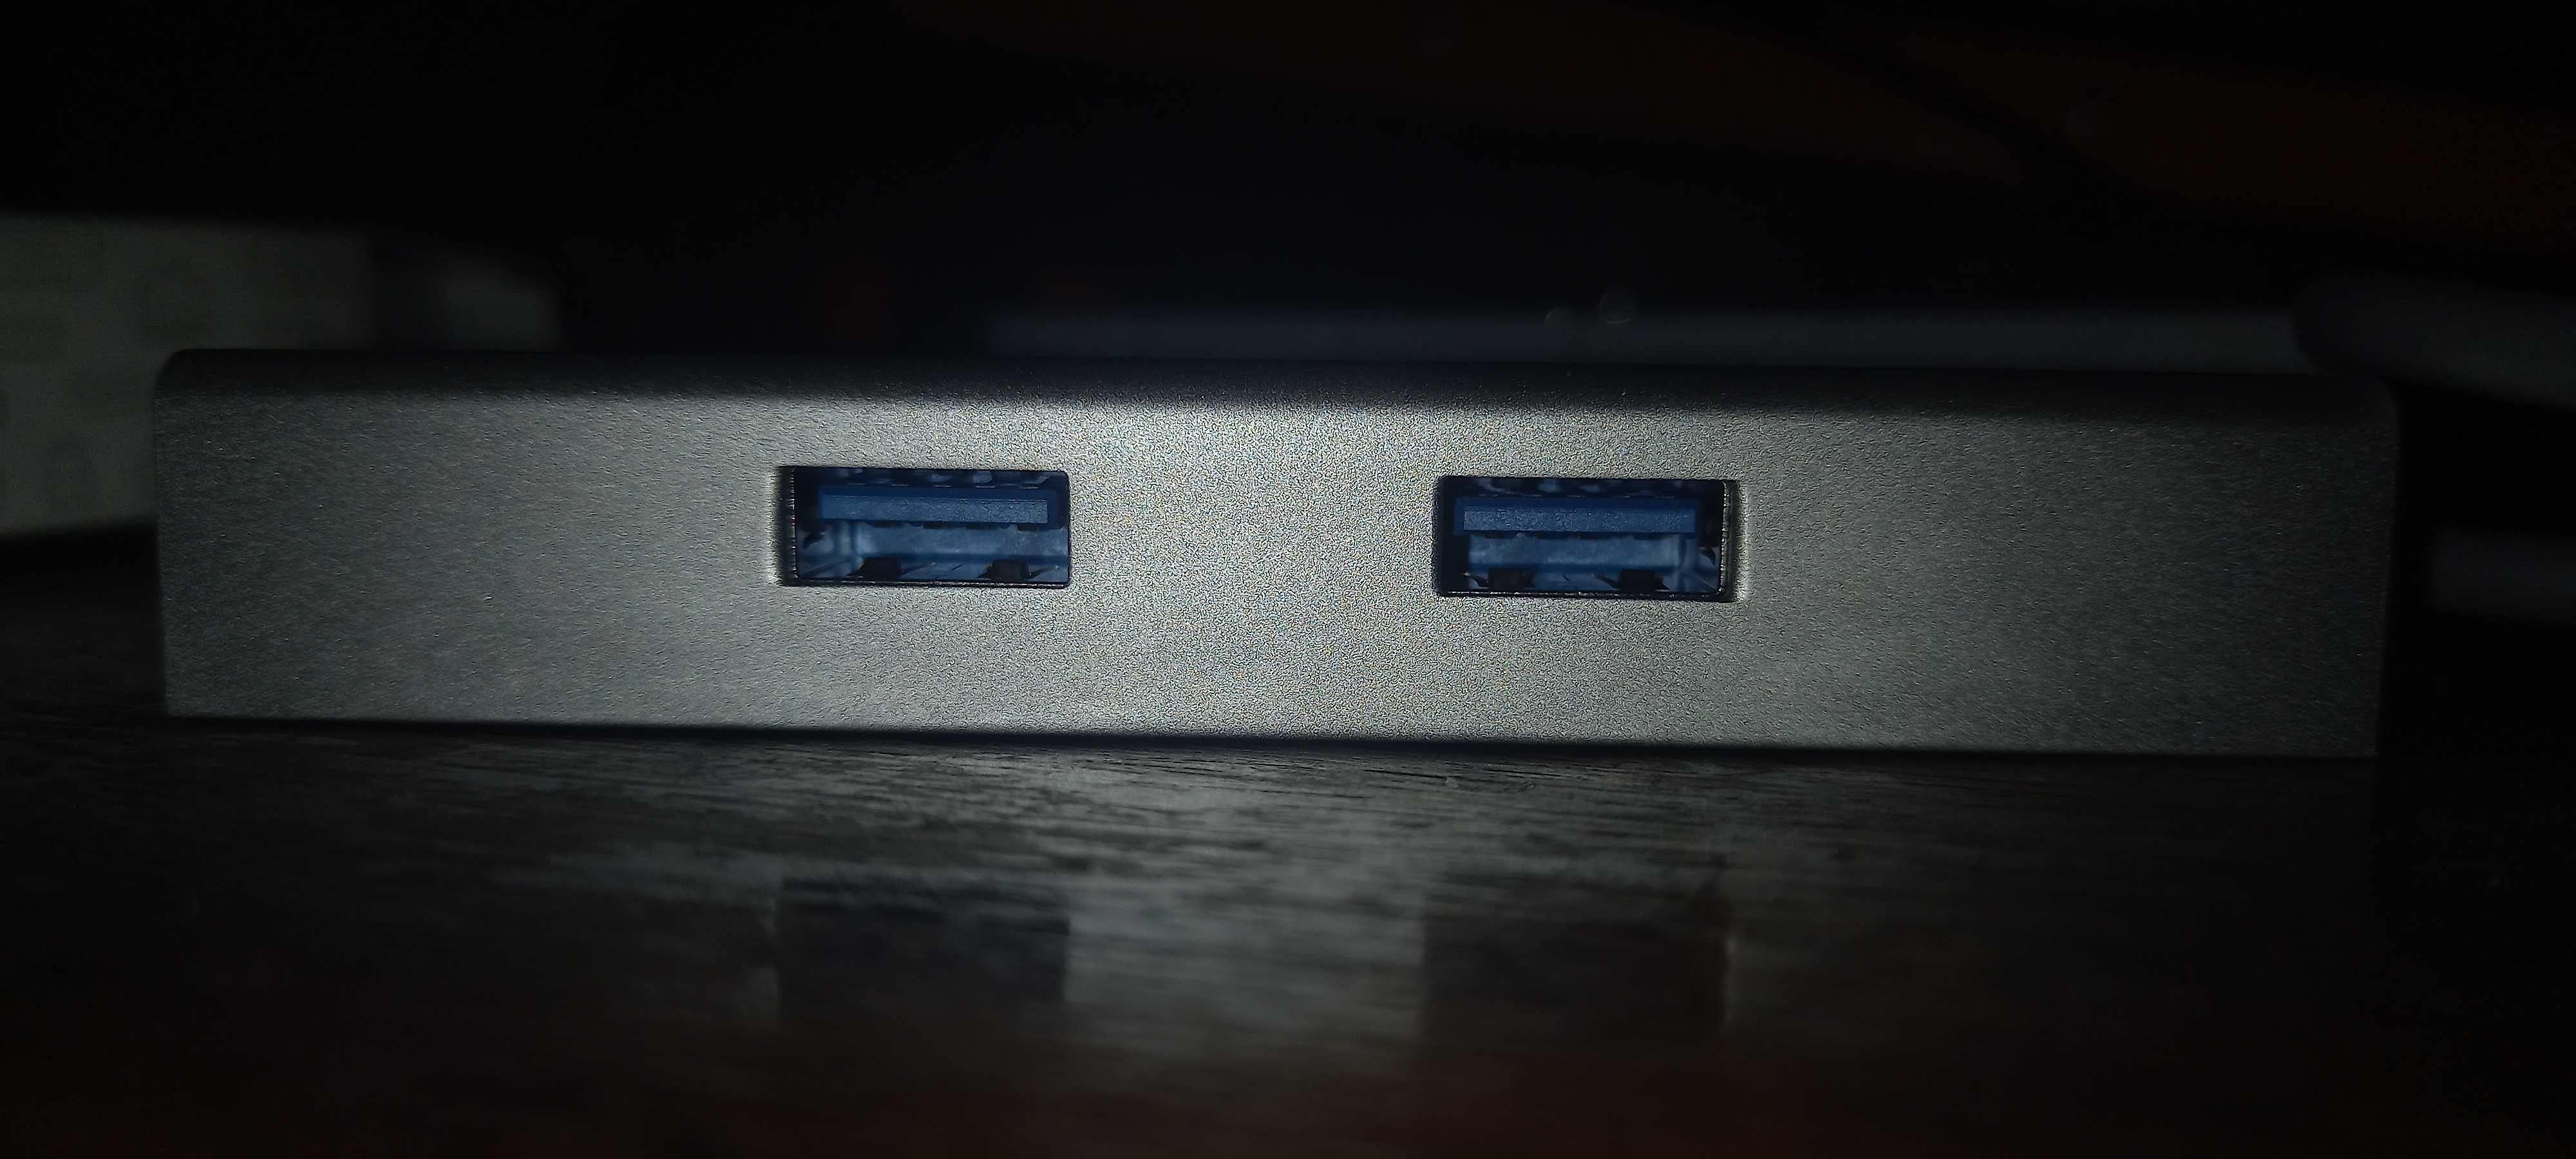 Hub USB 3.1 type C Lindy